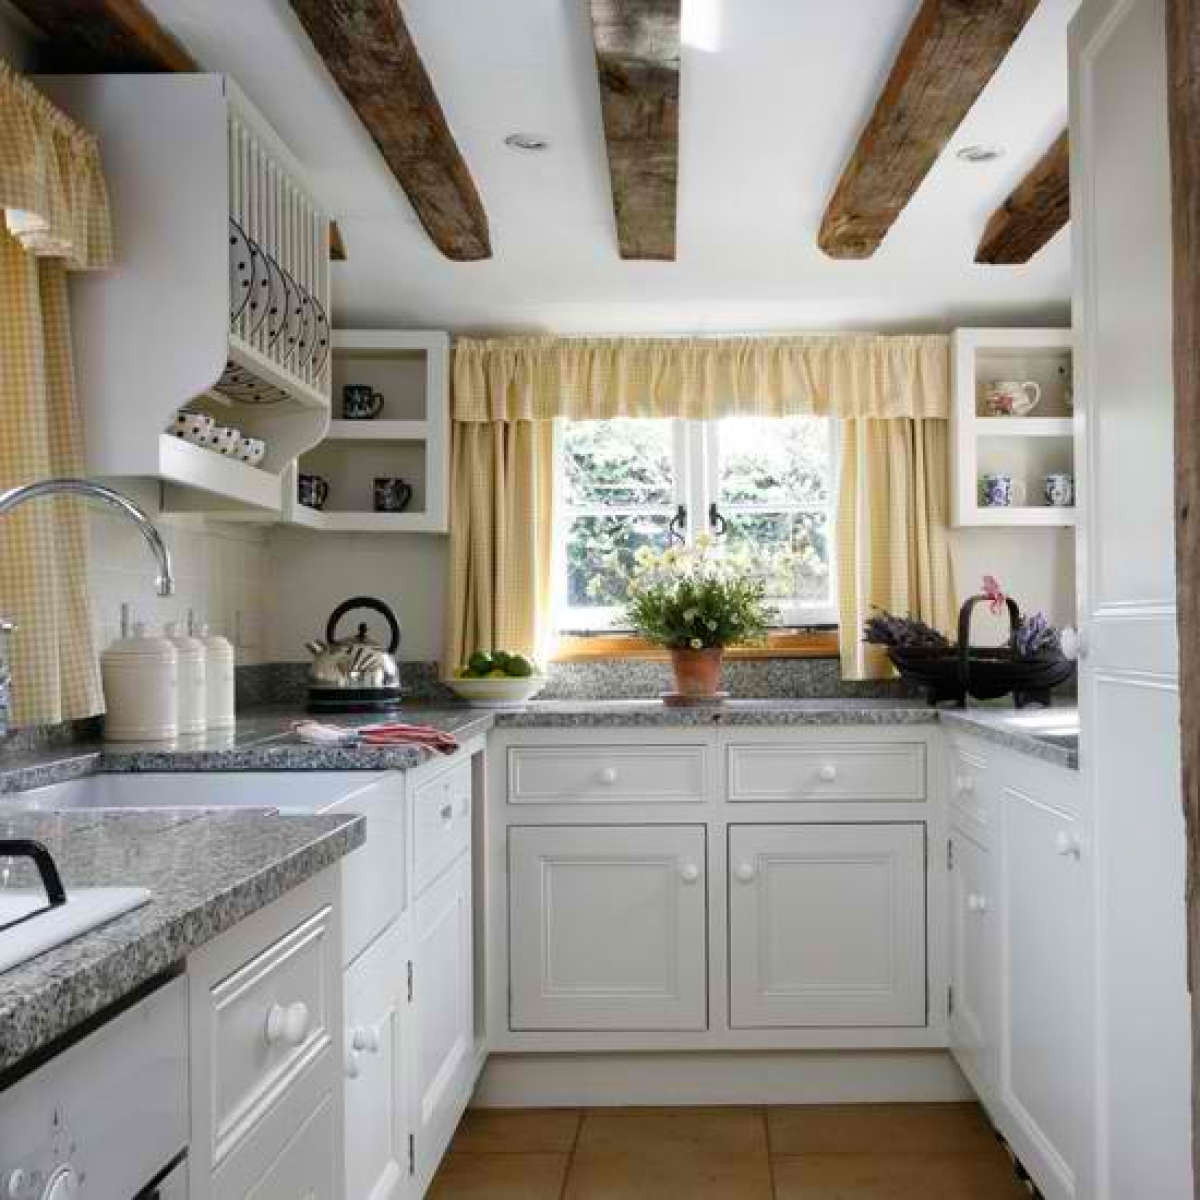 Smart and stylish kitchen design ideas - Photo 2.